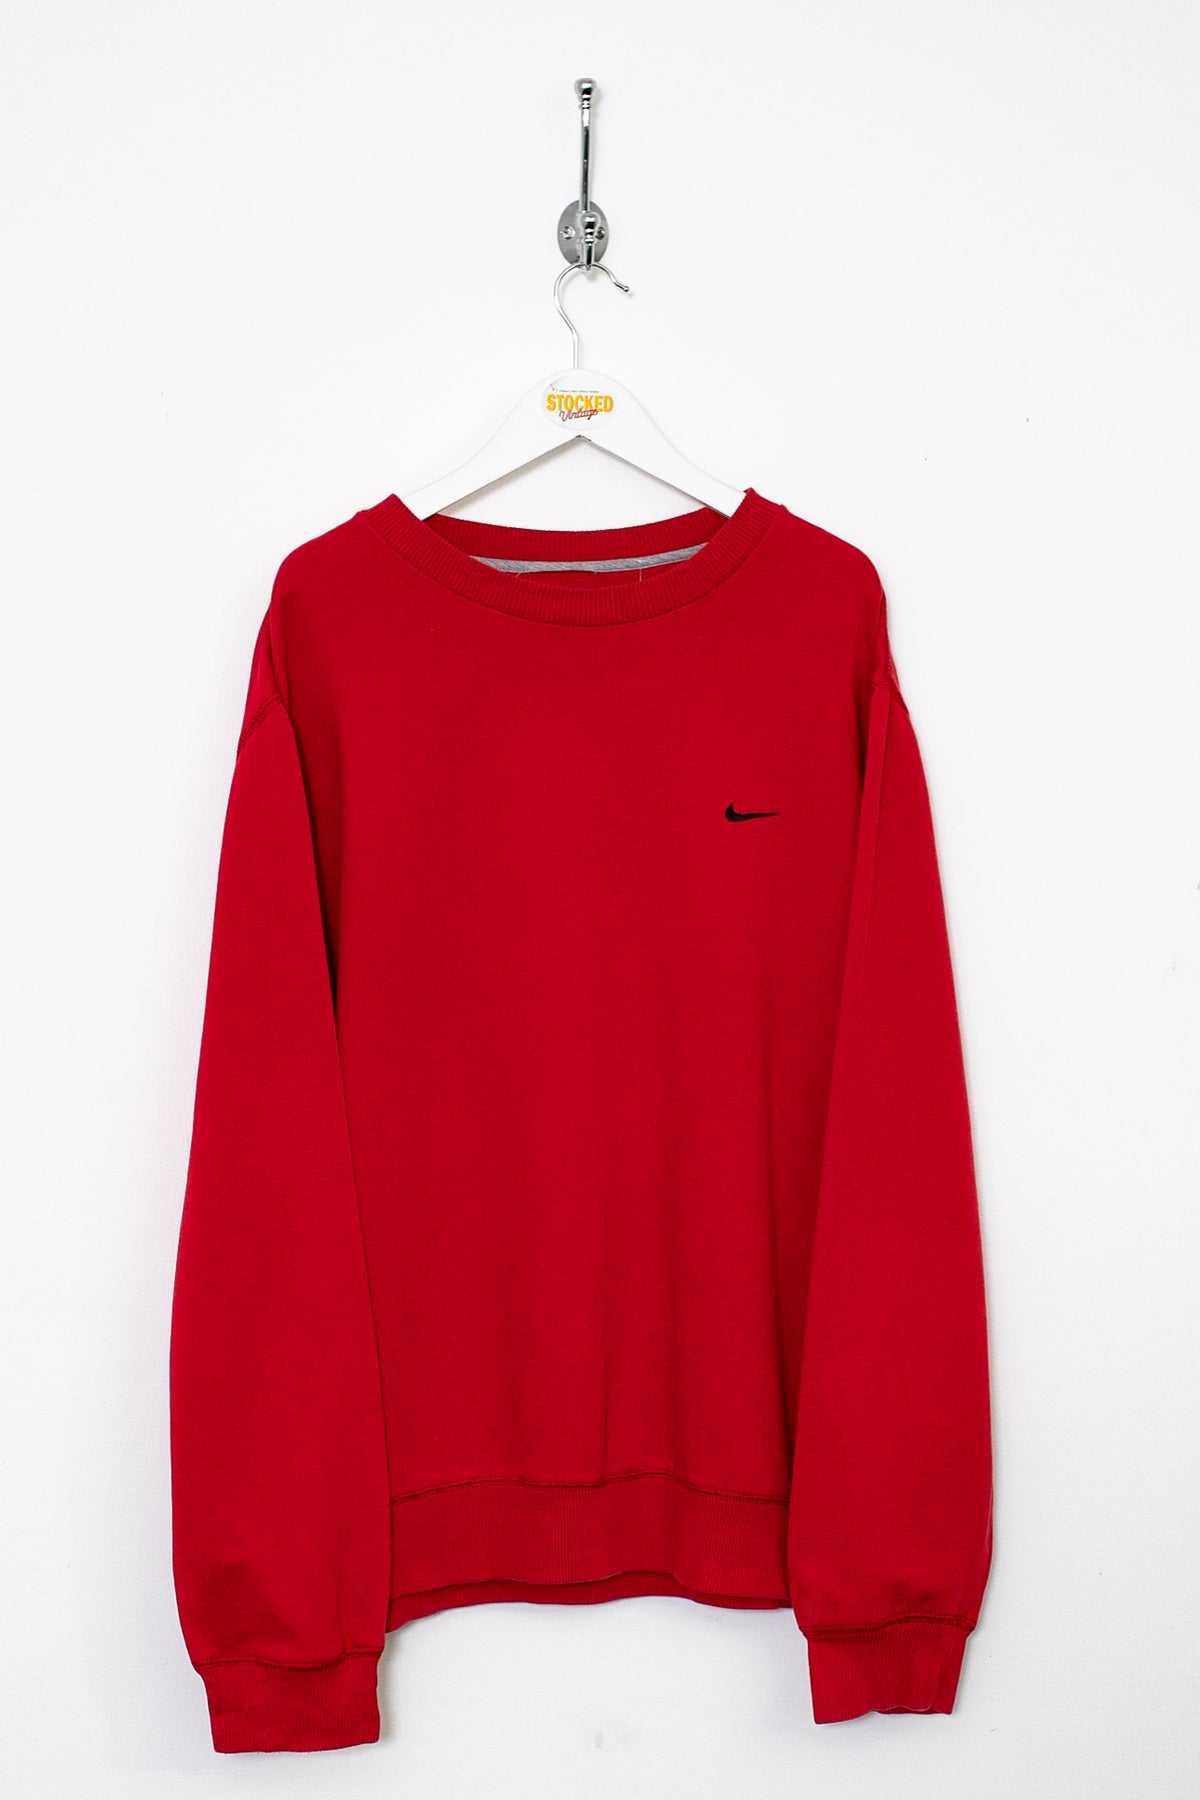 Nike Sweatshirt (XL)